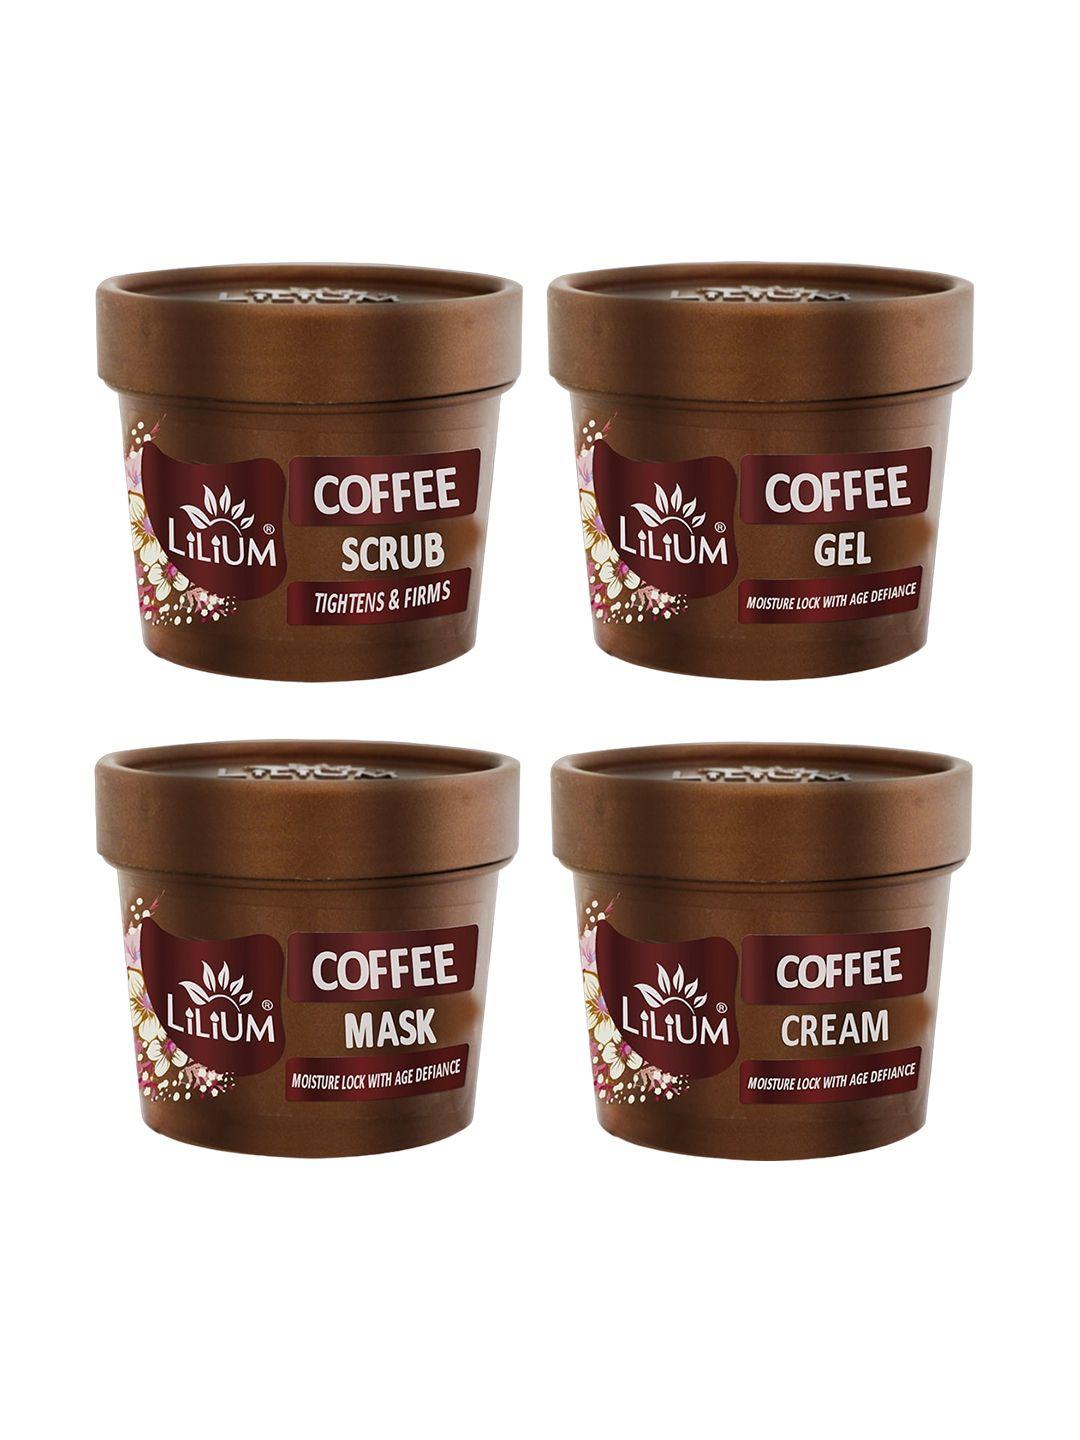 lilium coffee scrub gel mask cream set for moisture lock age defiance - 100g each